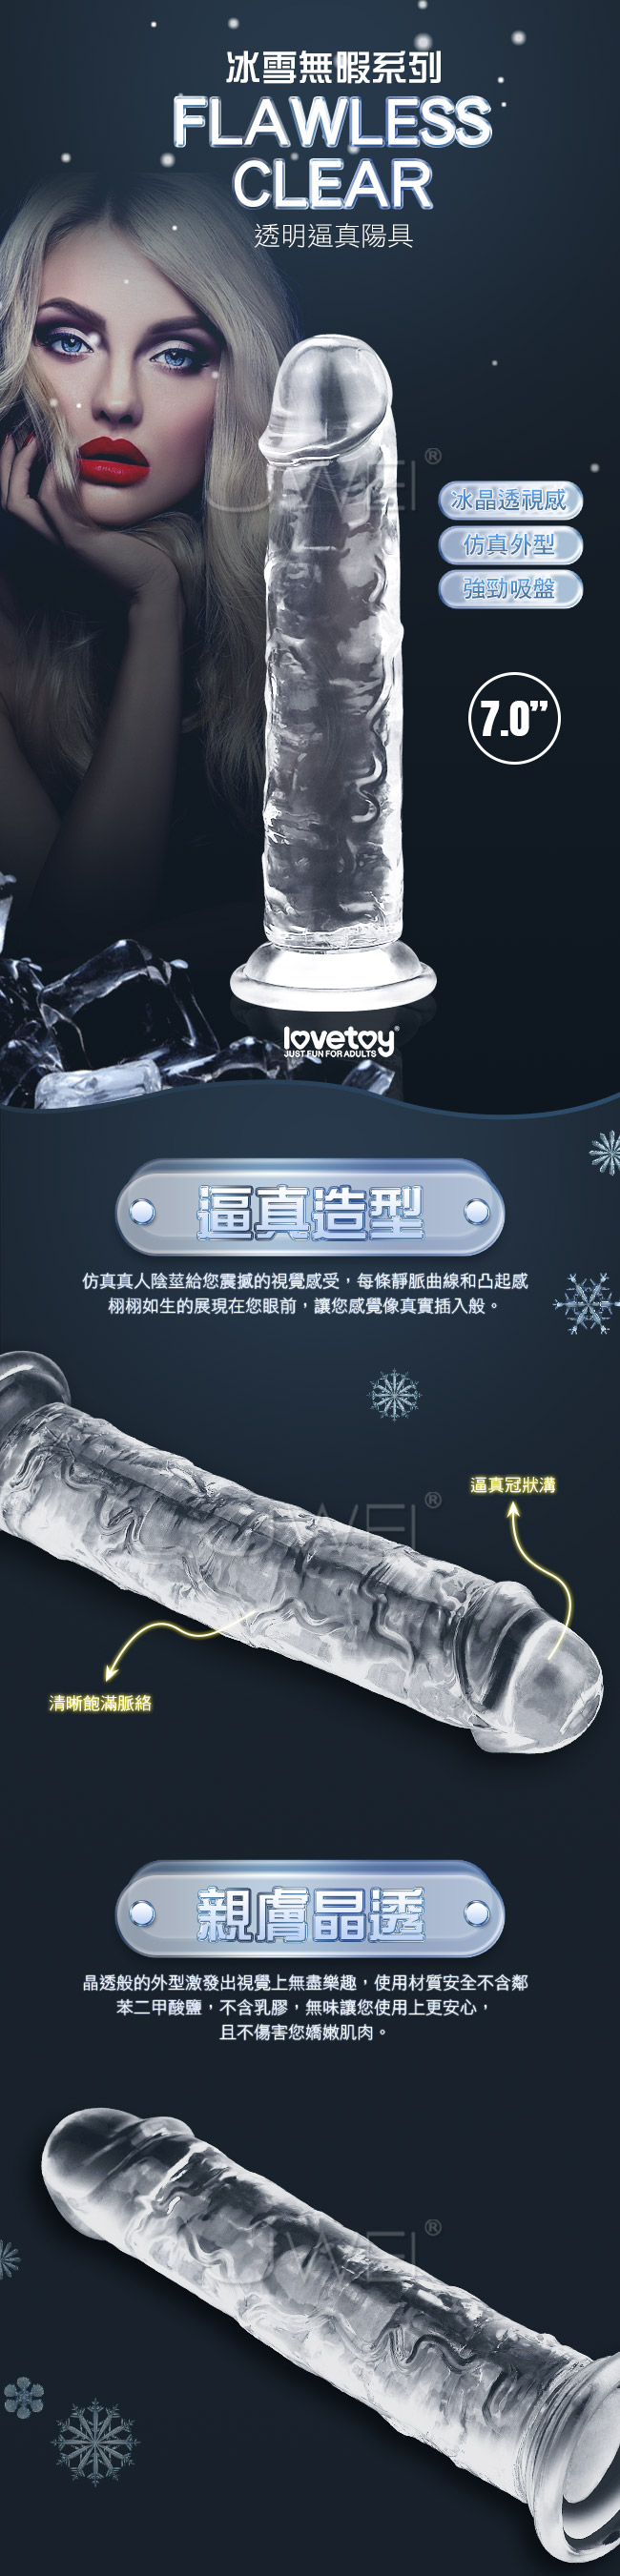 【Lovetoy原廠貨】Flawless Clear冰雪無暇系列 Dildo透明逼真按摩棒-7吋#310015